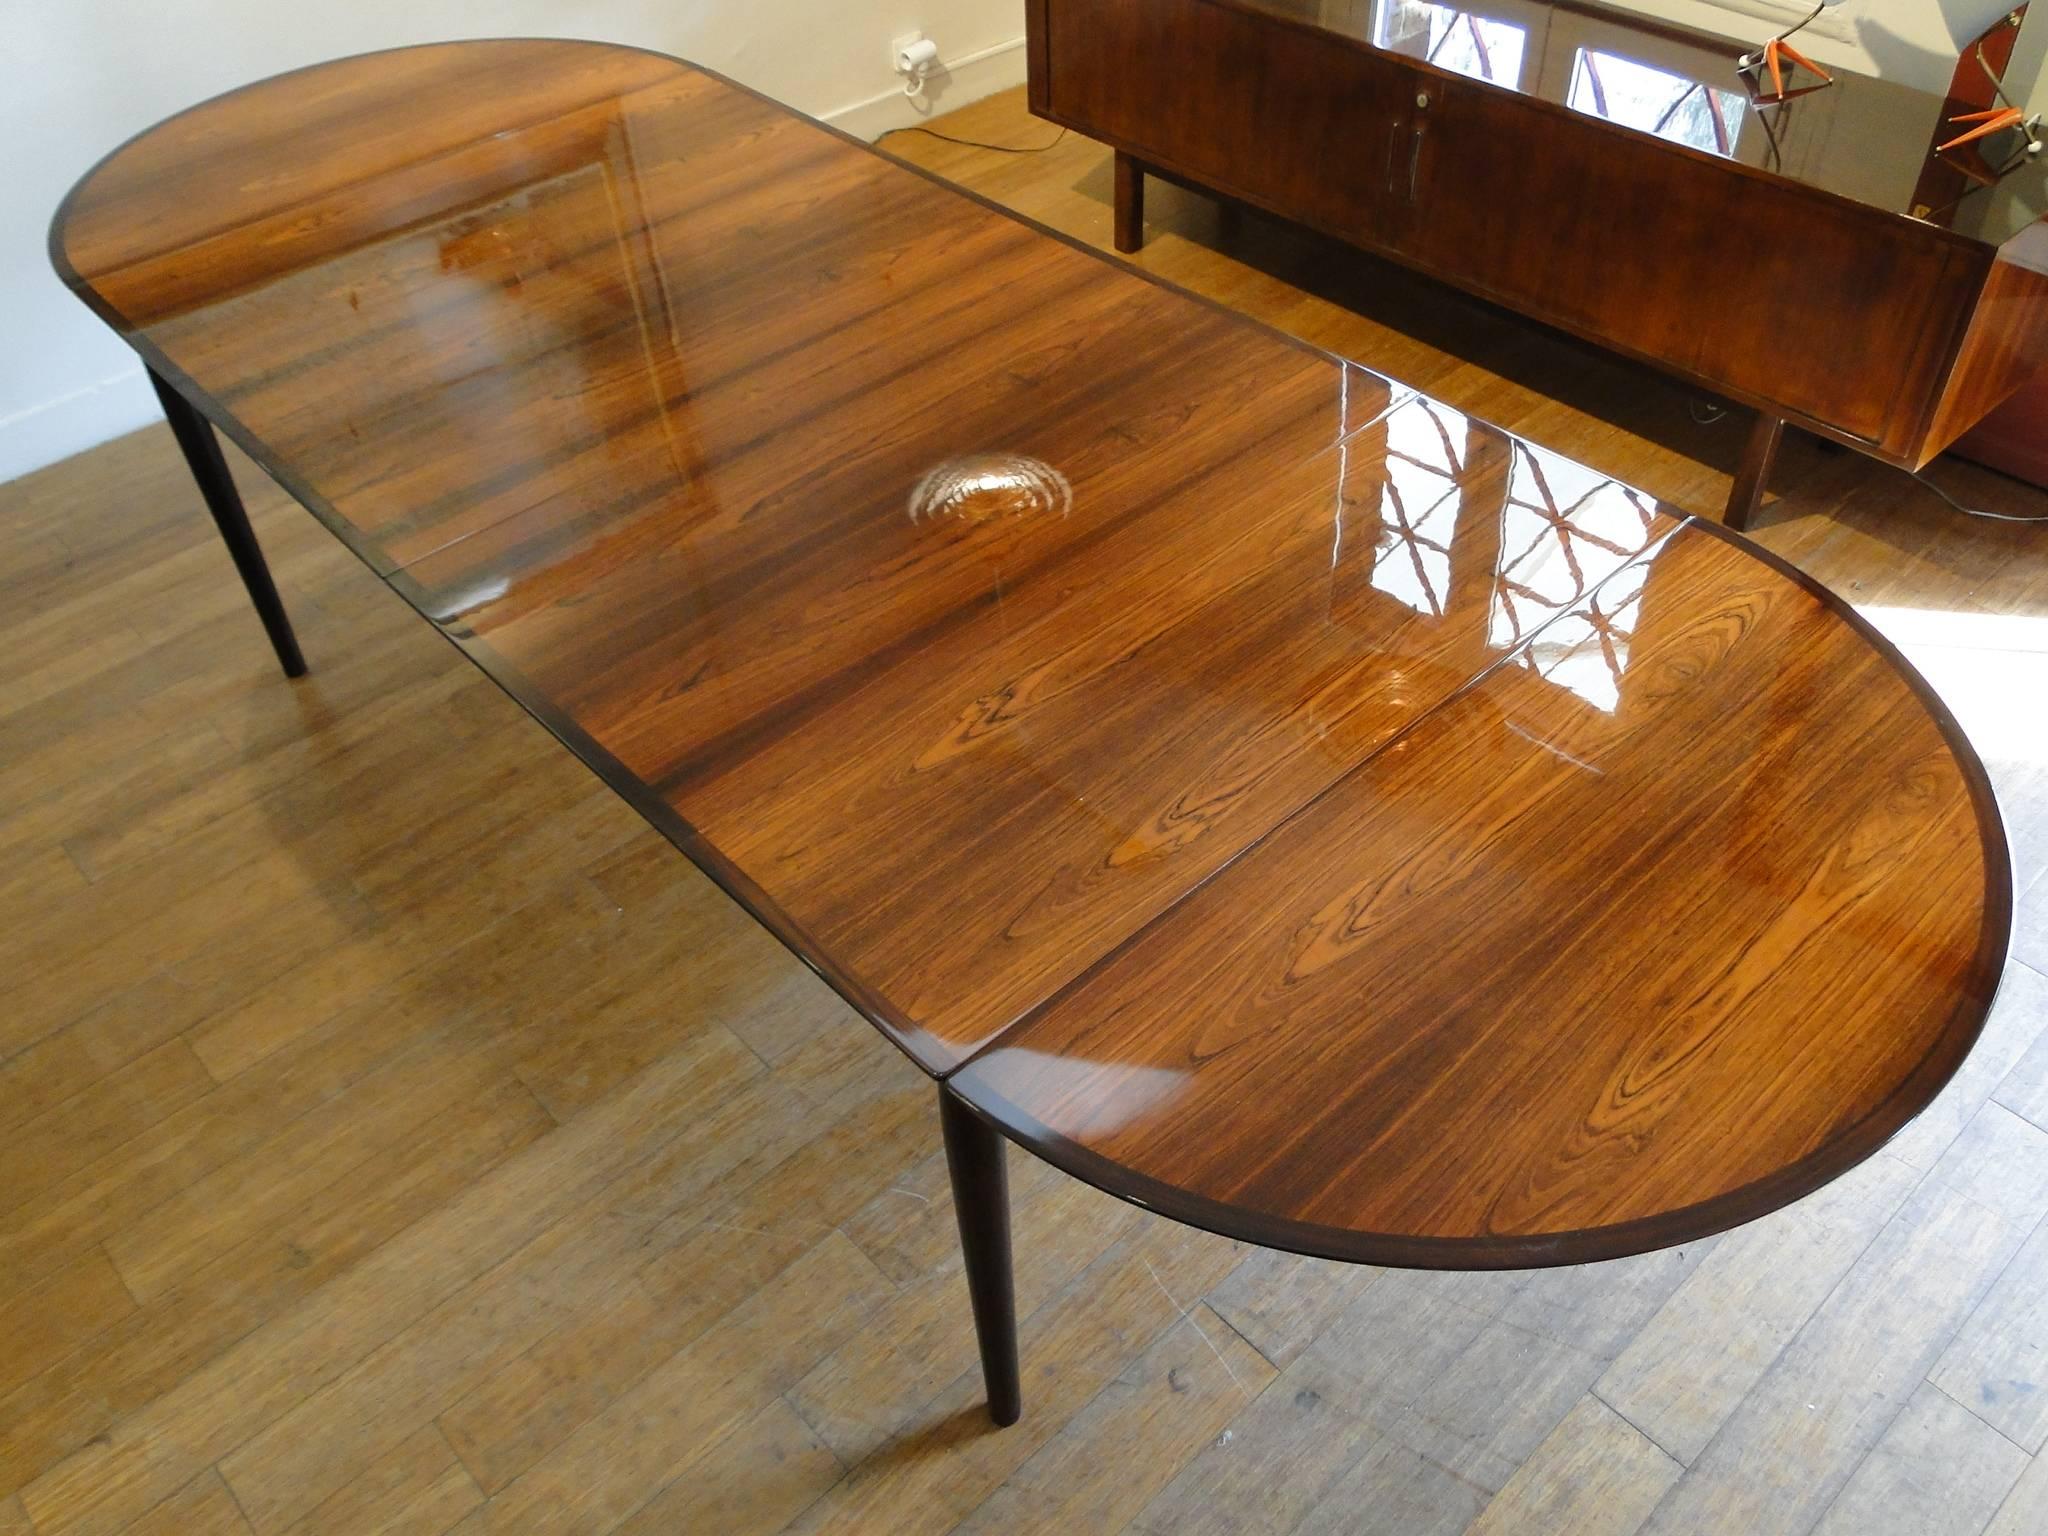 Arne Vodder Dining Table for Sibast Furniture In Excellent Condition For Sale In Saint-Ouen, FR